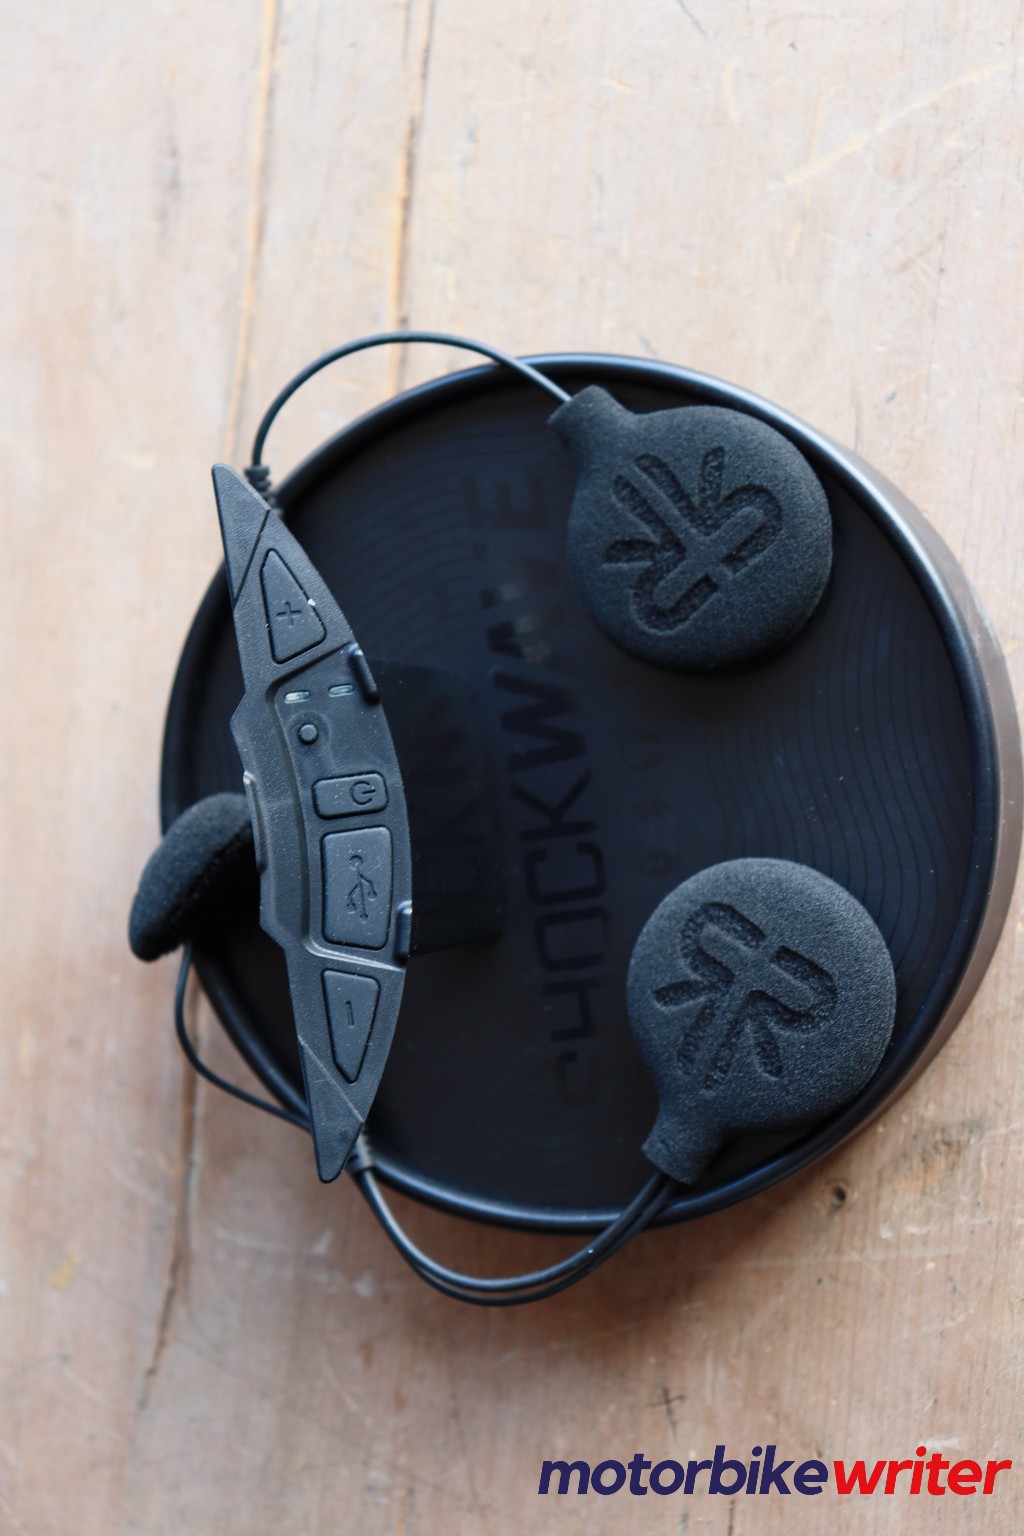 Closeup of Shockwave Bluetooth speakers on Atlas 4 helmet